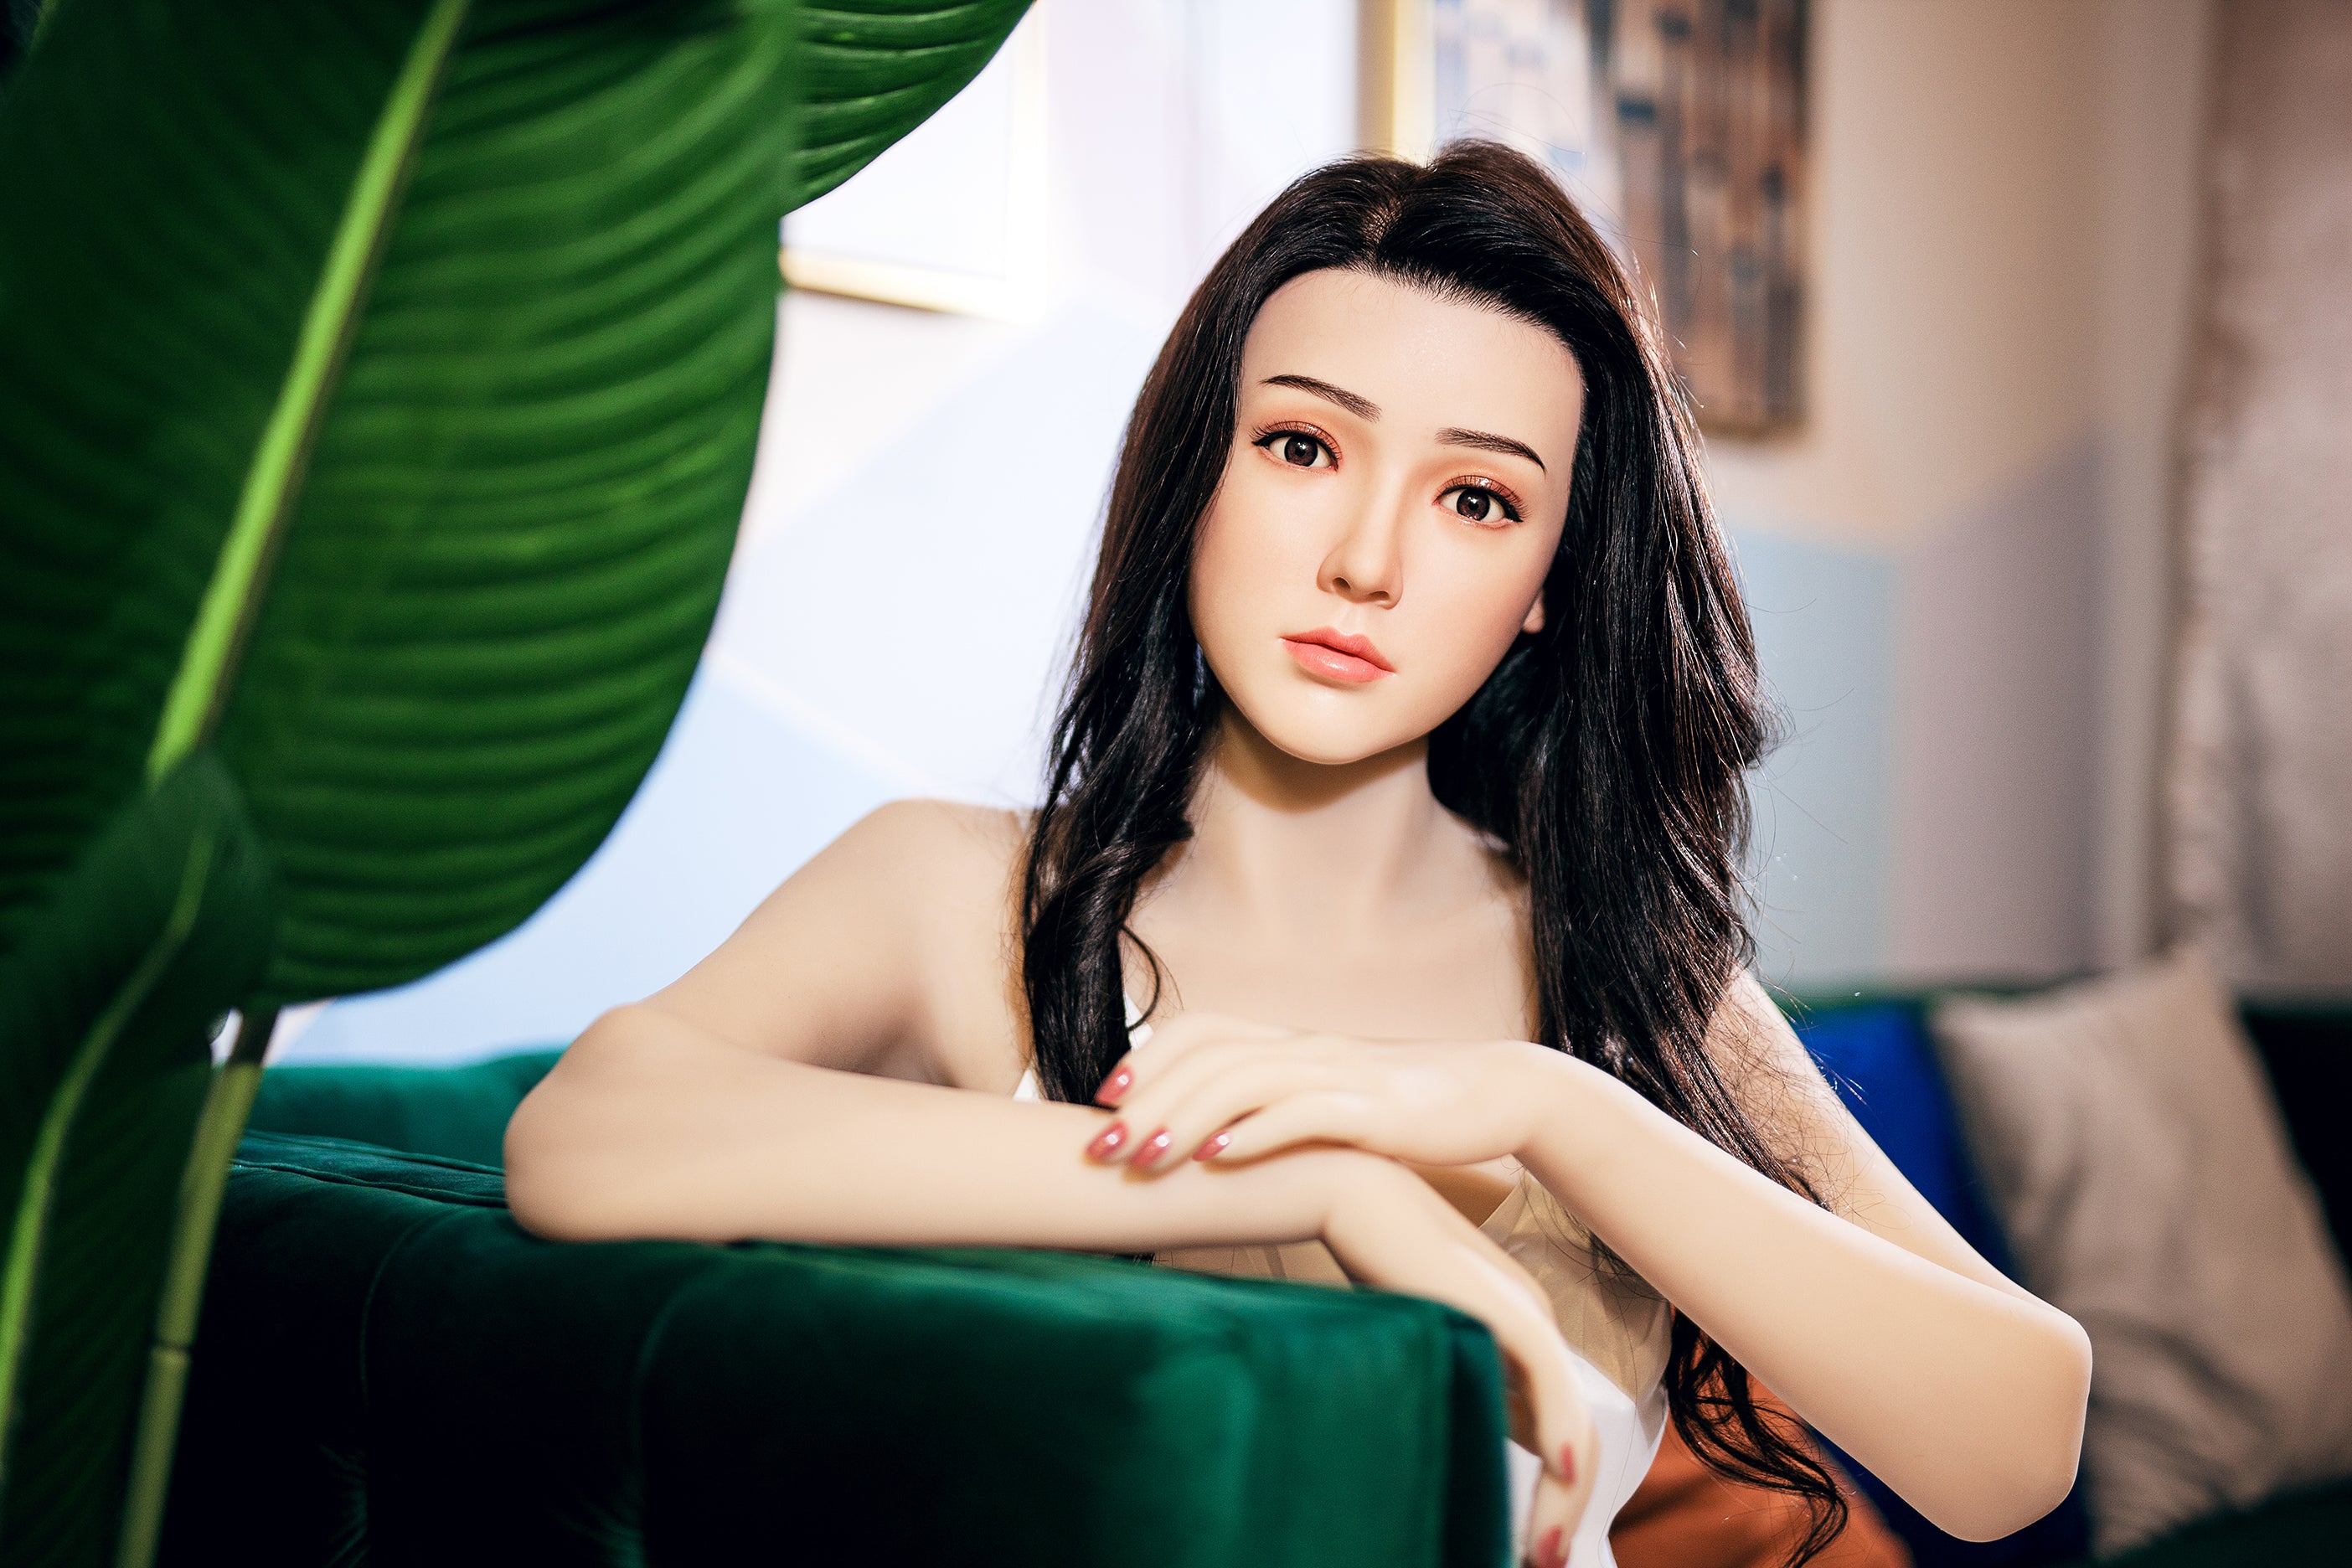 XYDoll - Xia - Silicone TPE Hybrid Sex Doll - 168cm - Implanted Hair - Natural